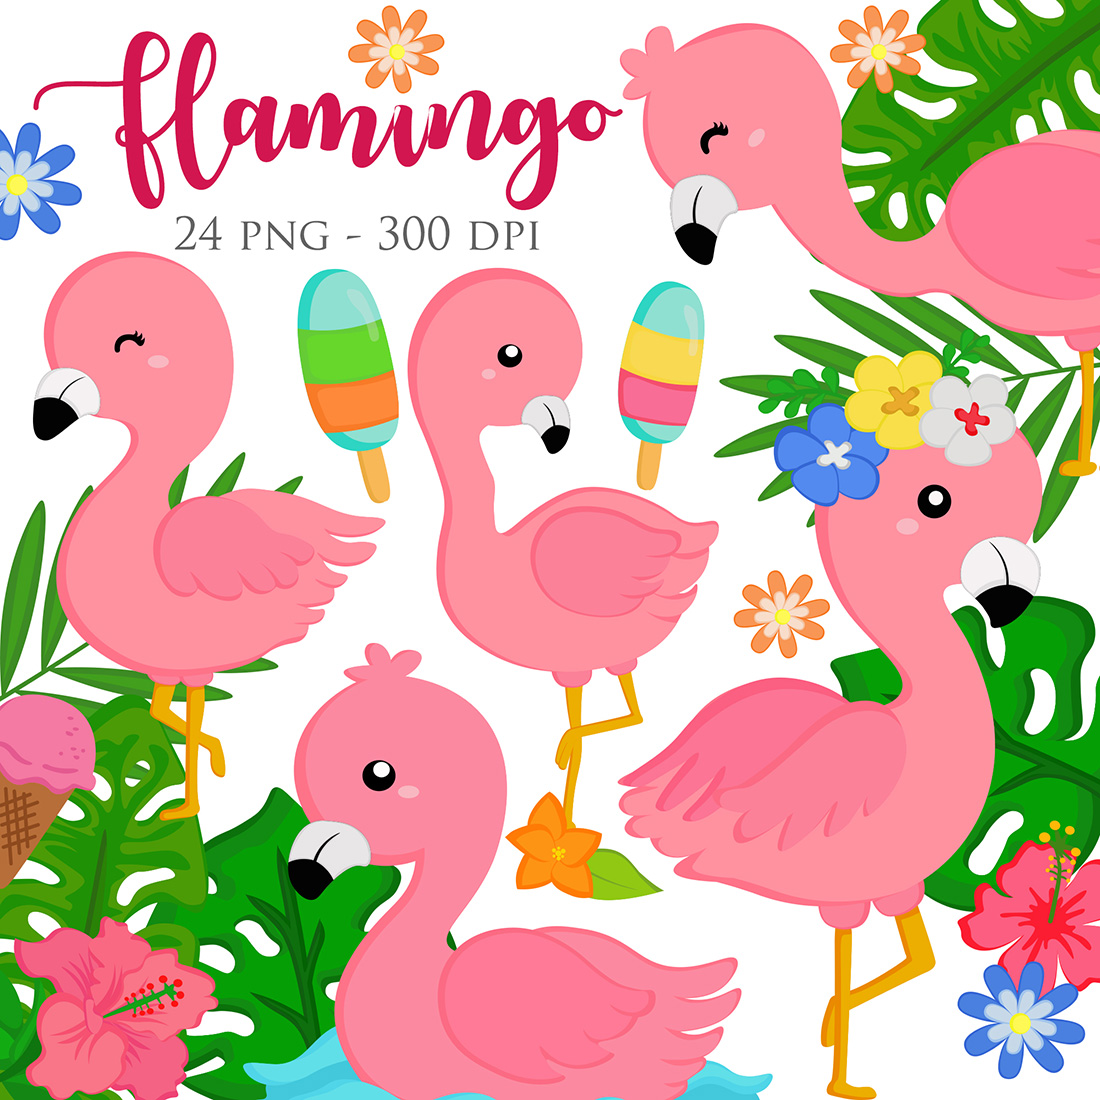 Cute Pink Flamingo Bird Animal Summer Party Nature Illustration Vector Clipart Cartoon cover image.